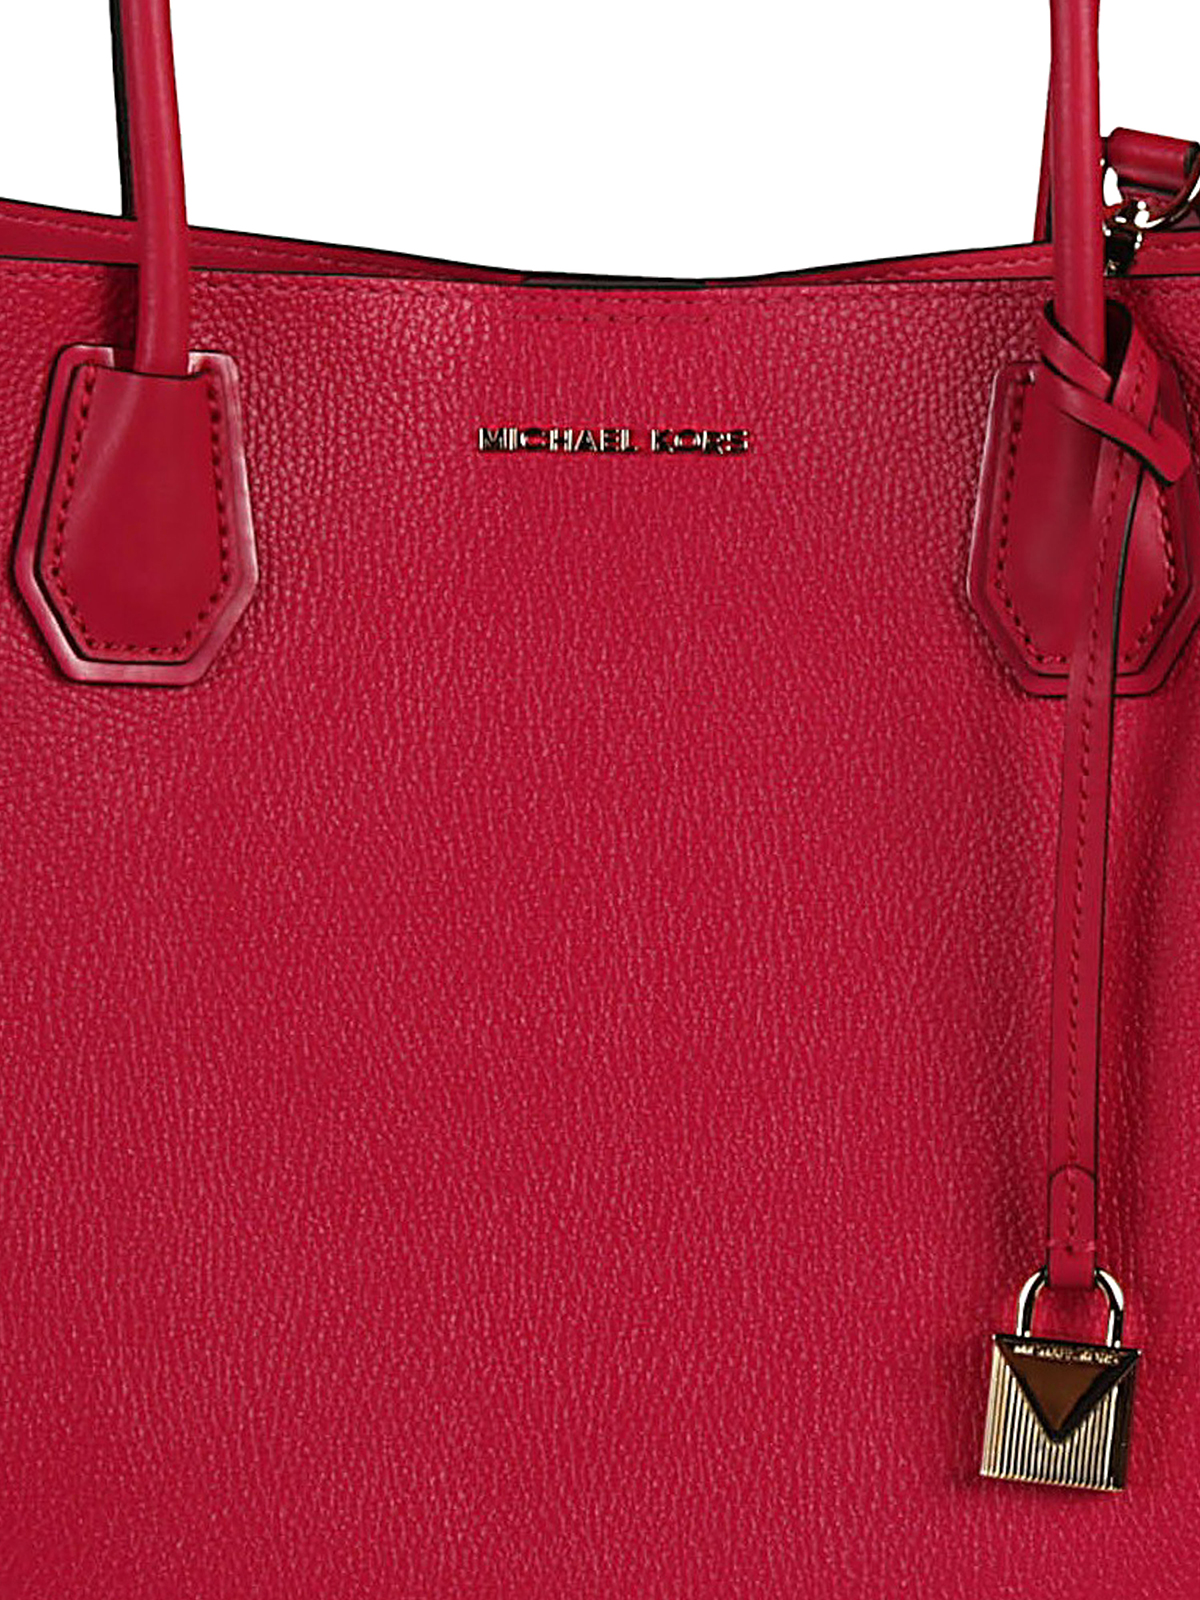 Totes bags Michael Kors - Mercer medium pink hammered leather tote